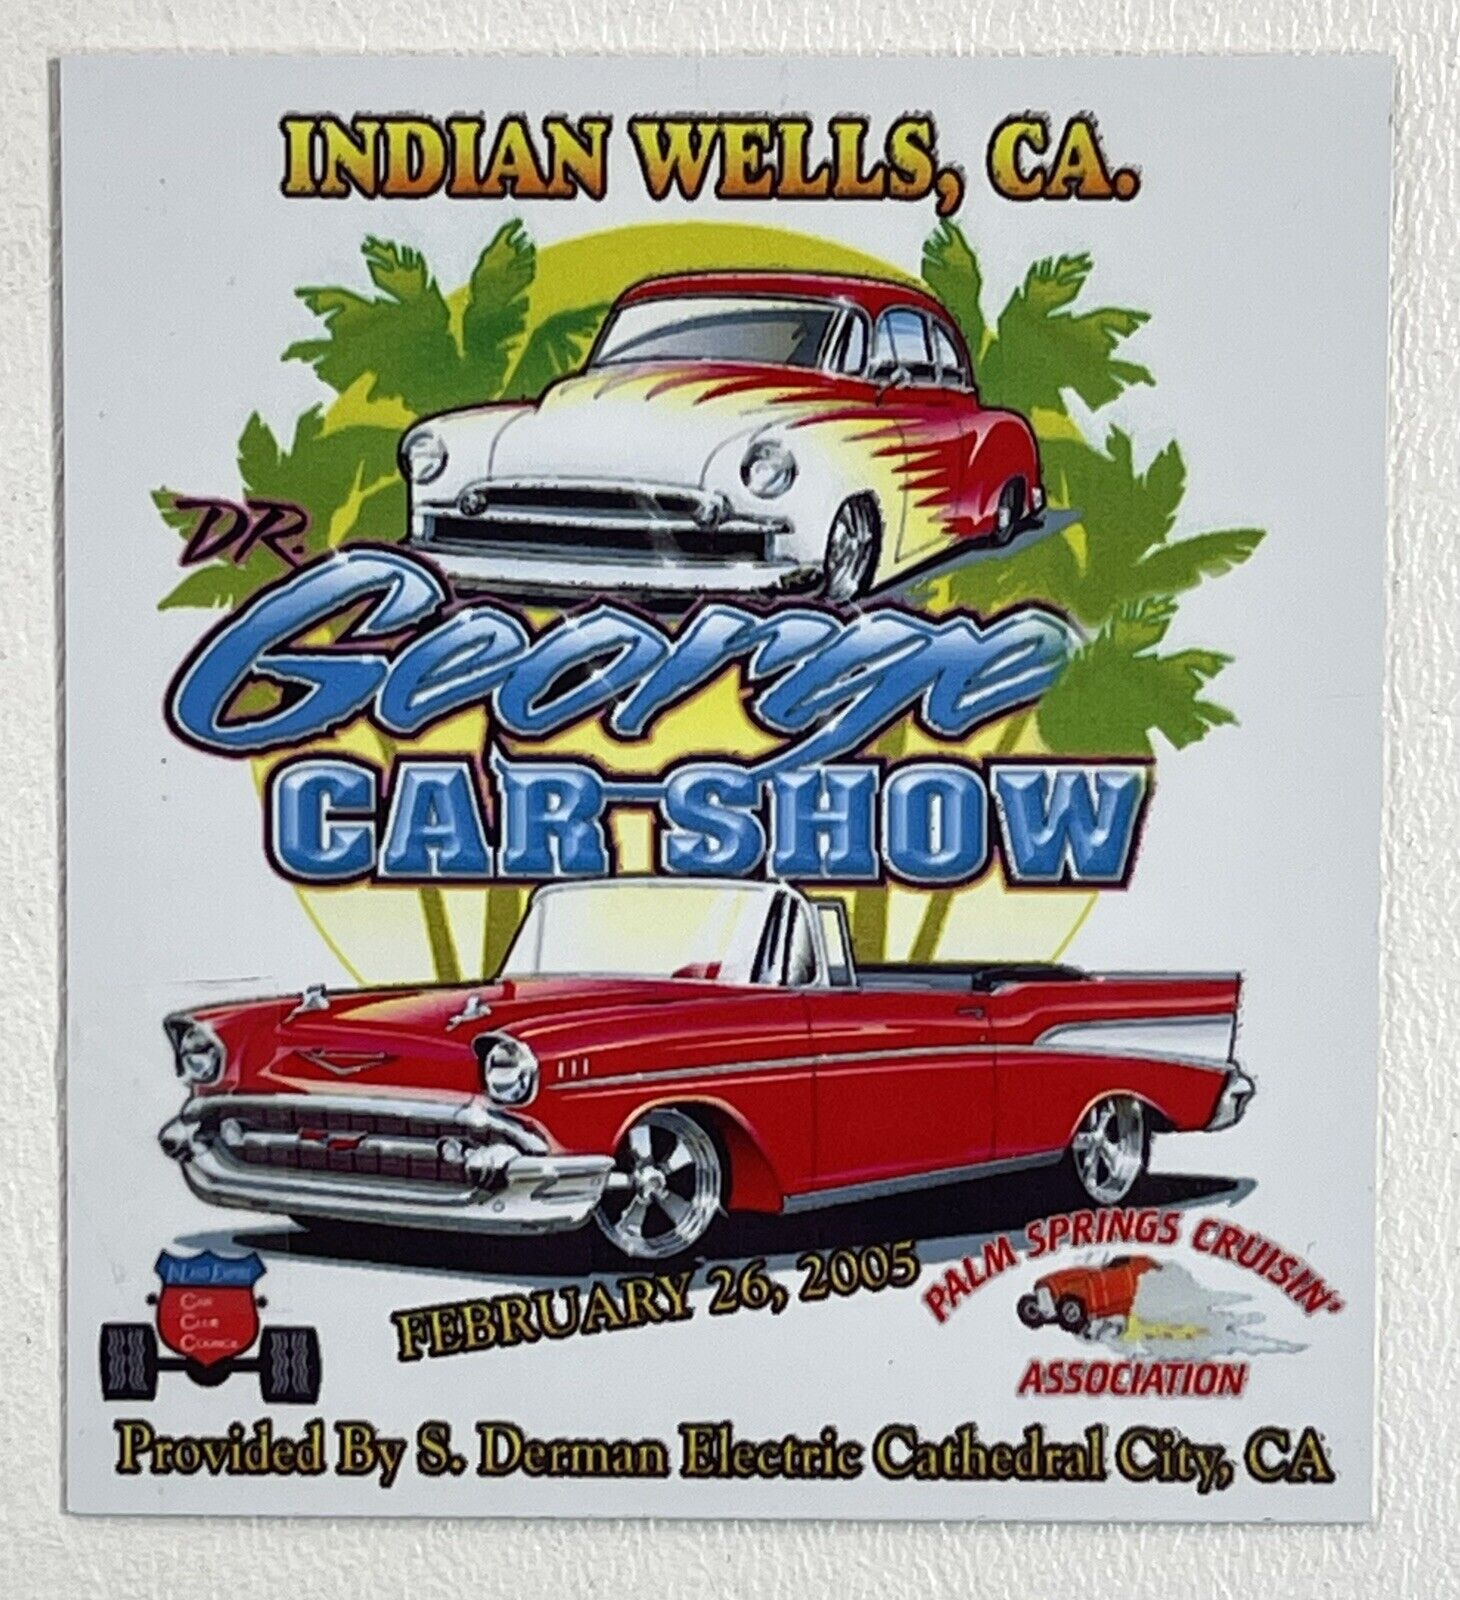 Dr George Car Show Palm Springs Cruisin Association 2005 Plaque